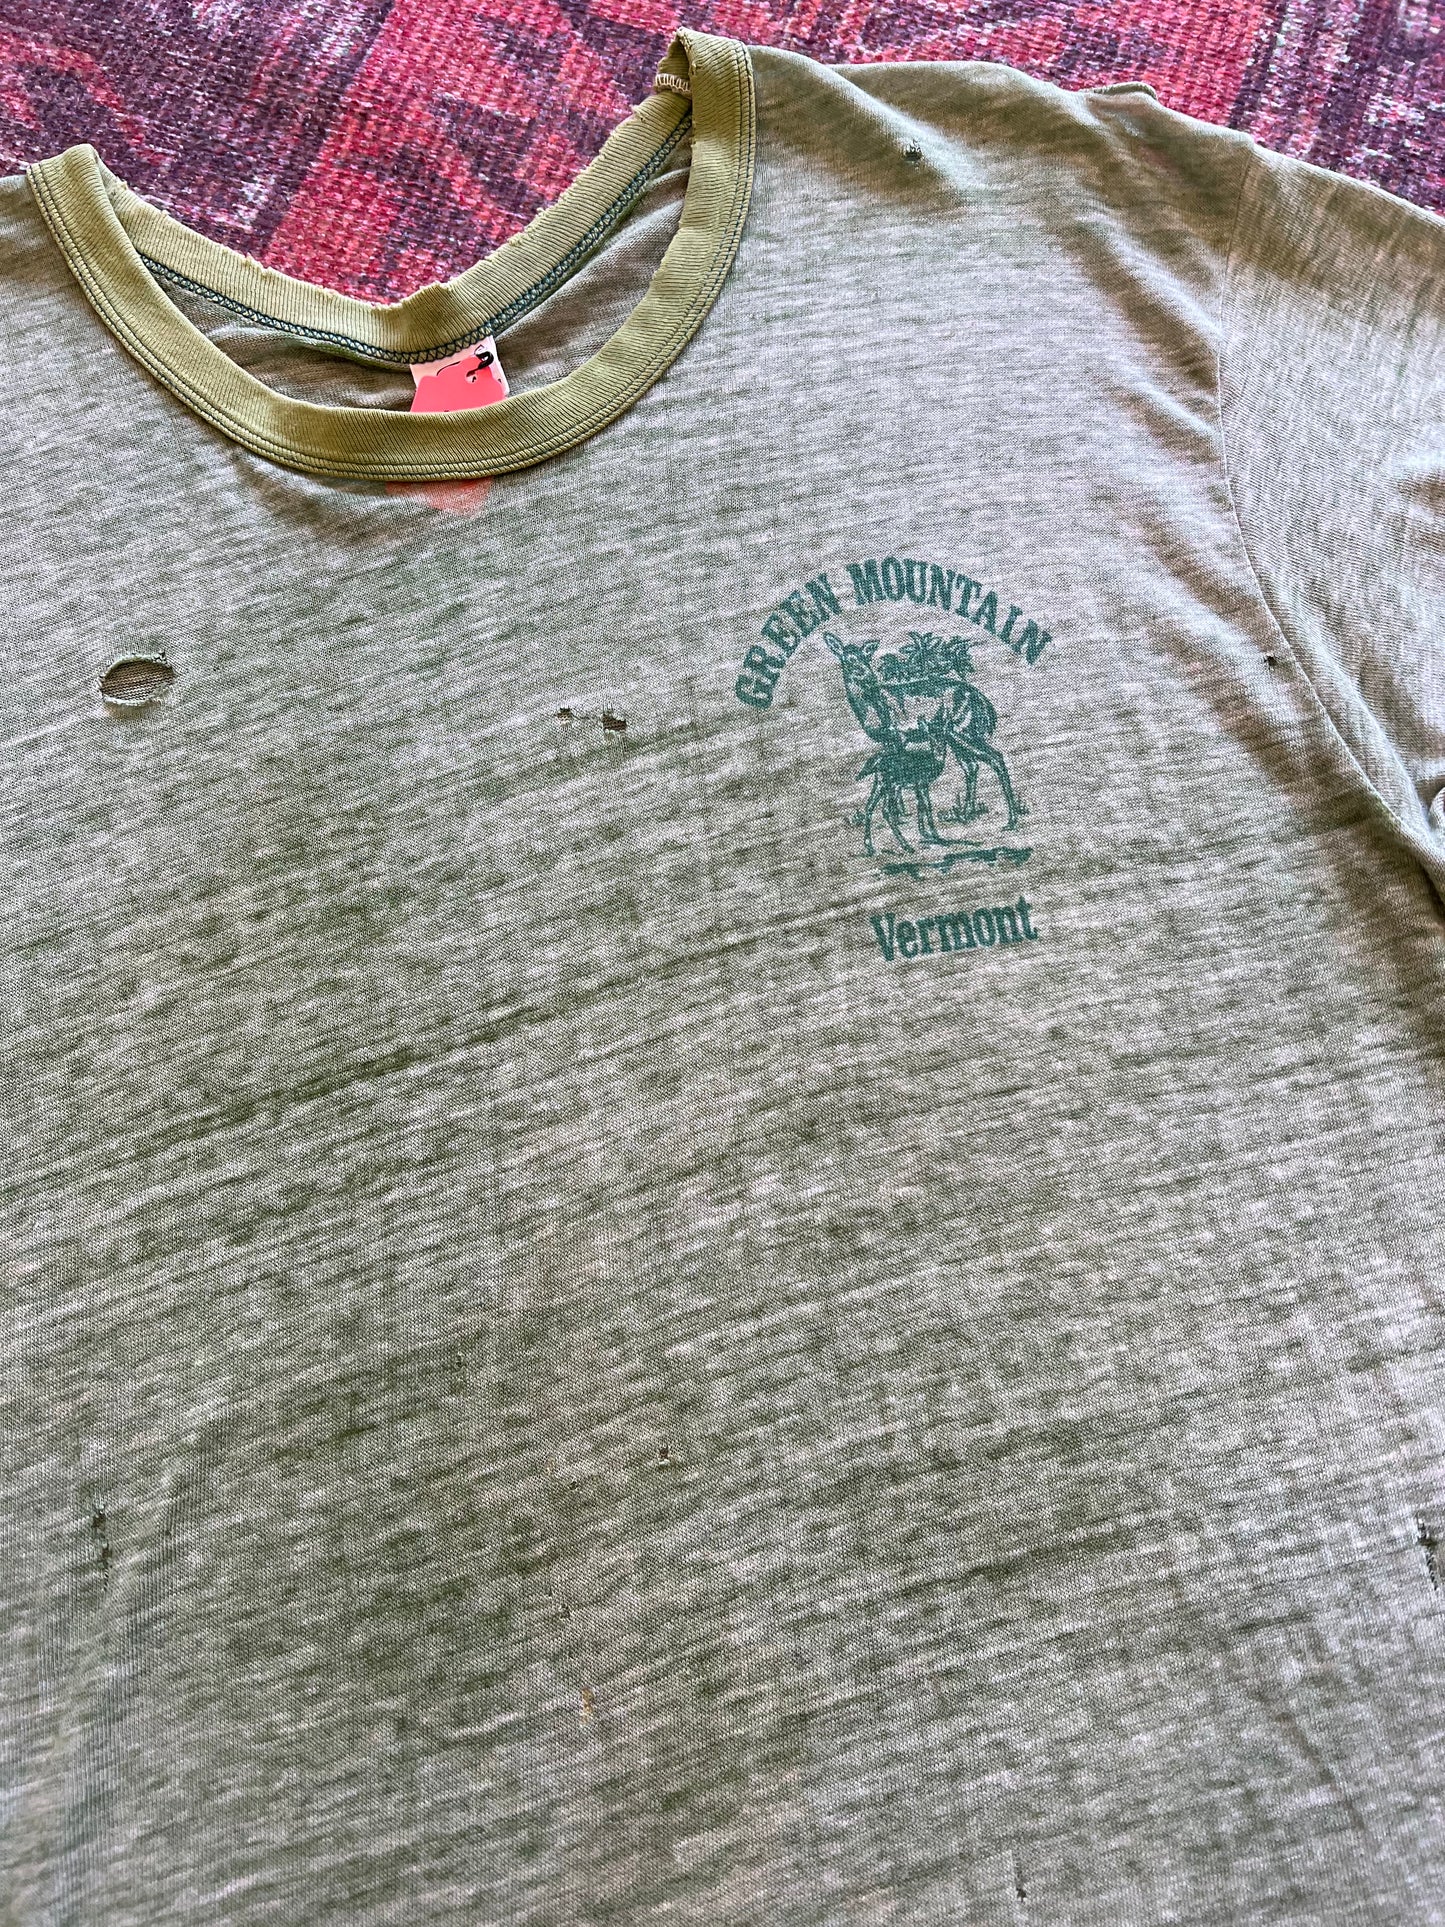 Green Mountain Vermont vintage tshirt